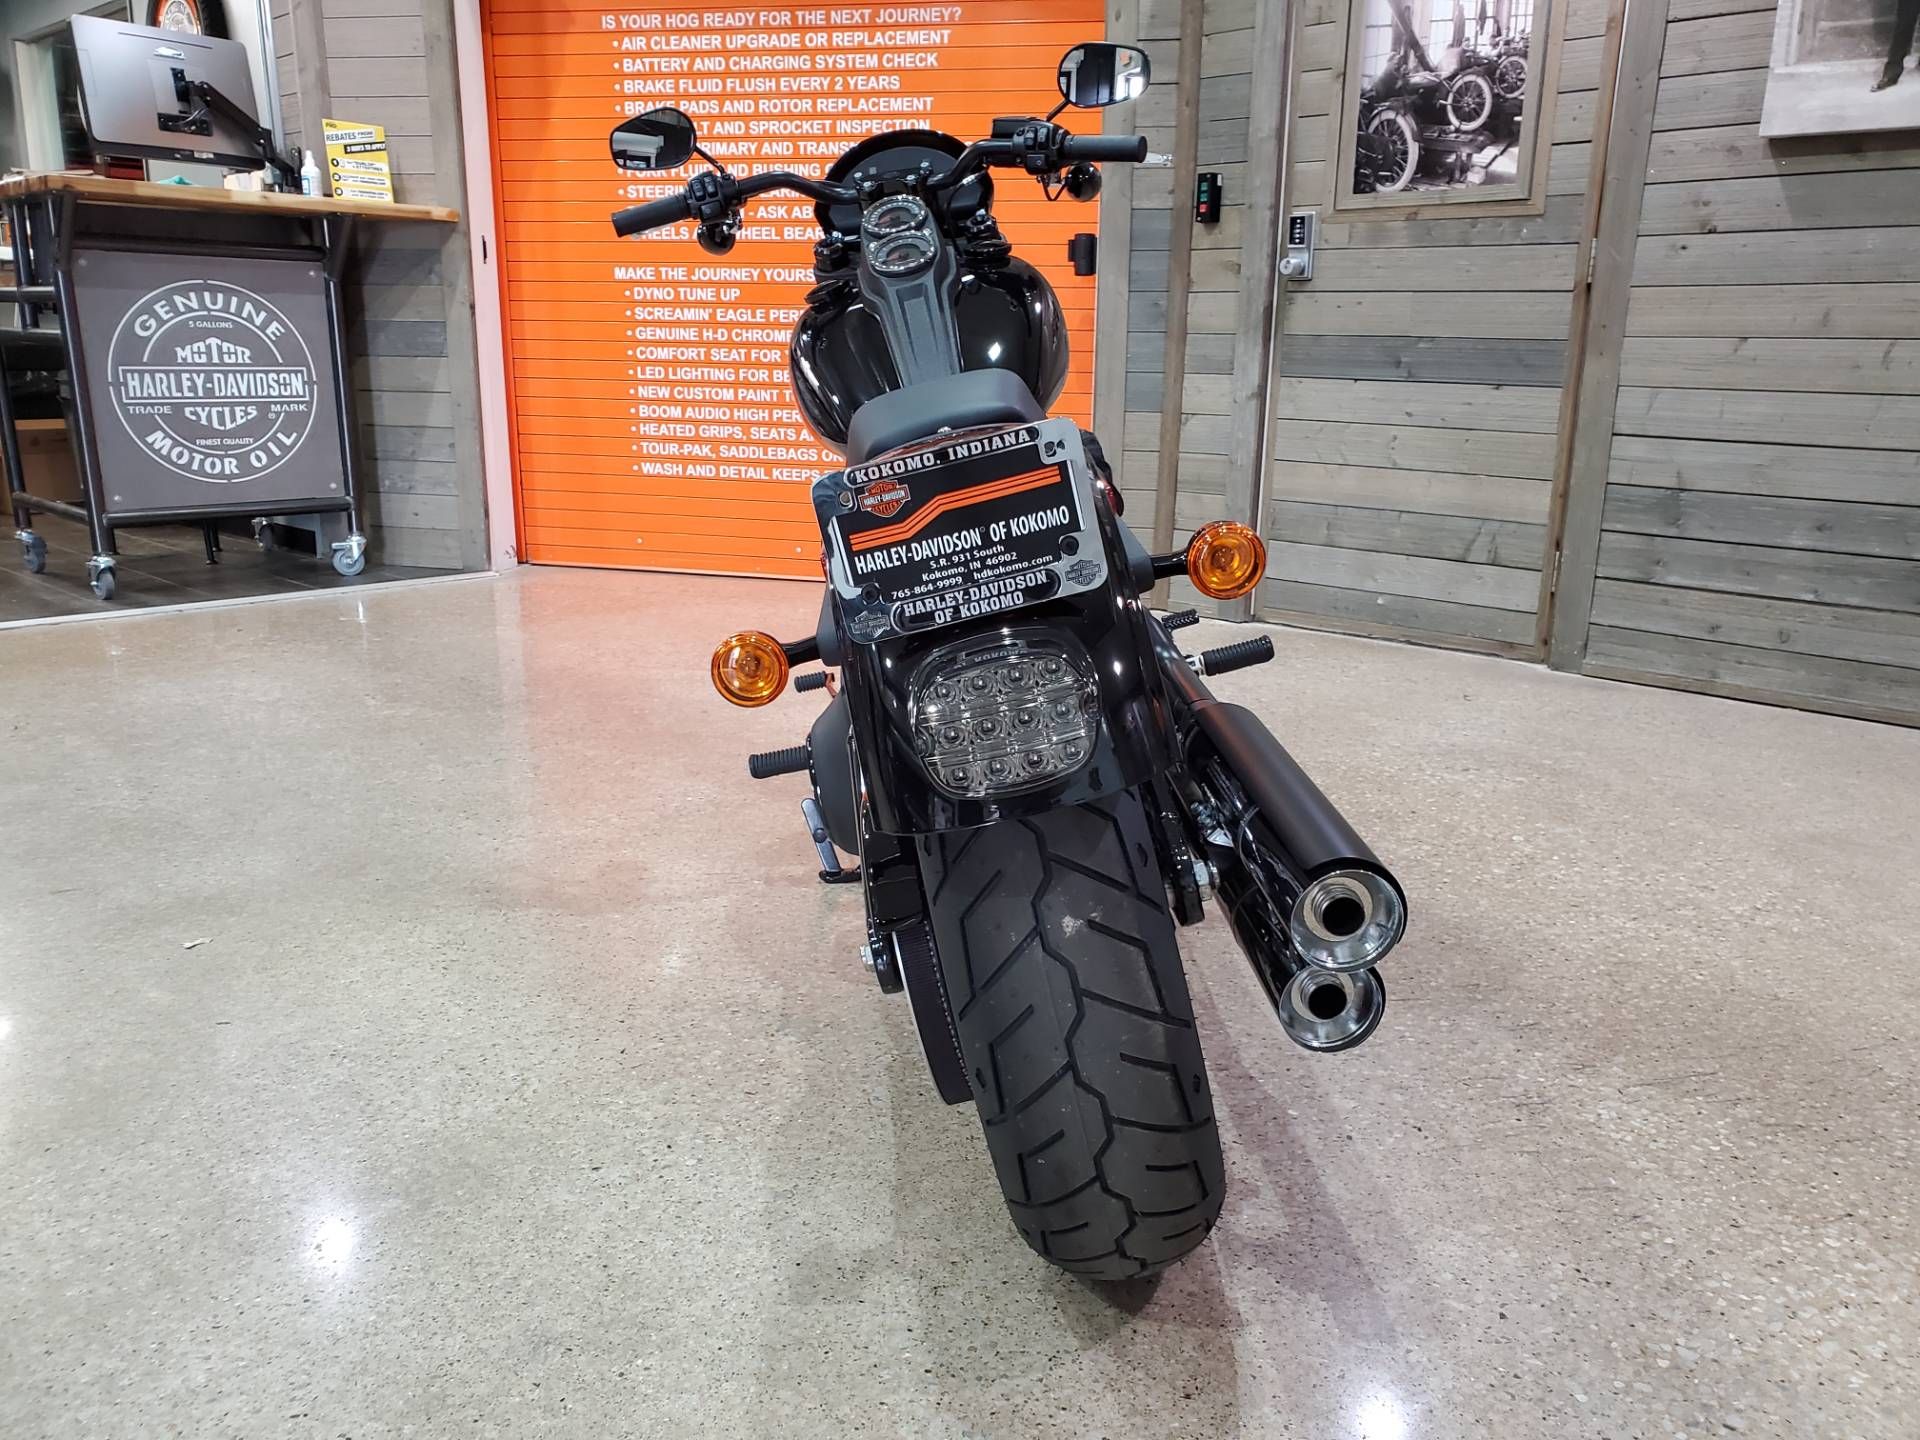 2021 Harley-Davidson Low Rider S Backview Via Indiana Harley-Davidson Group